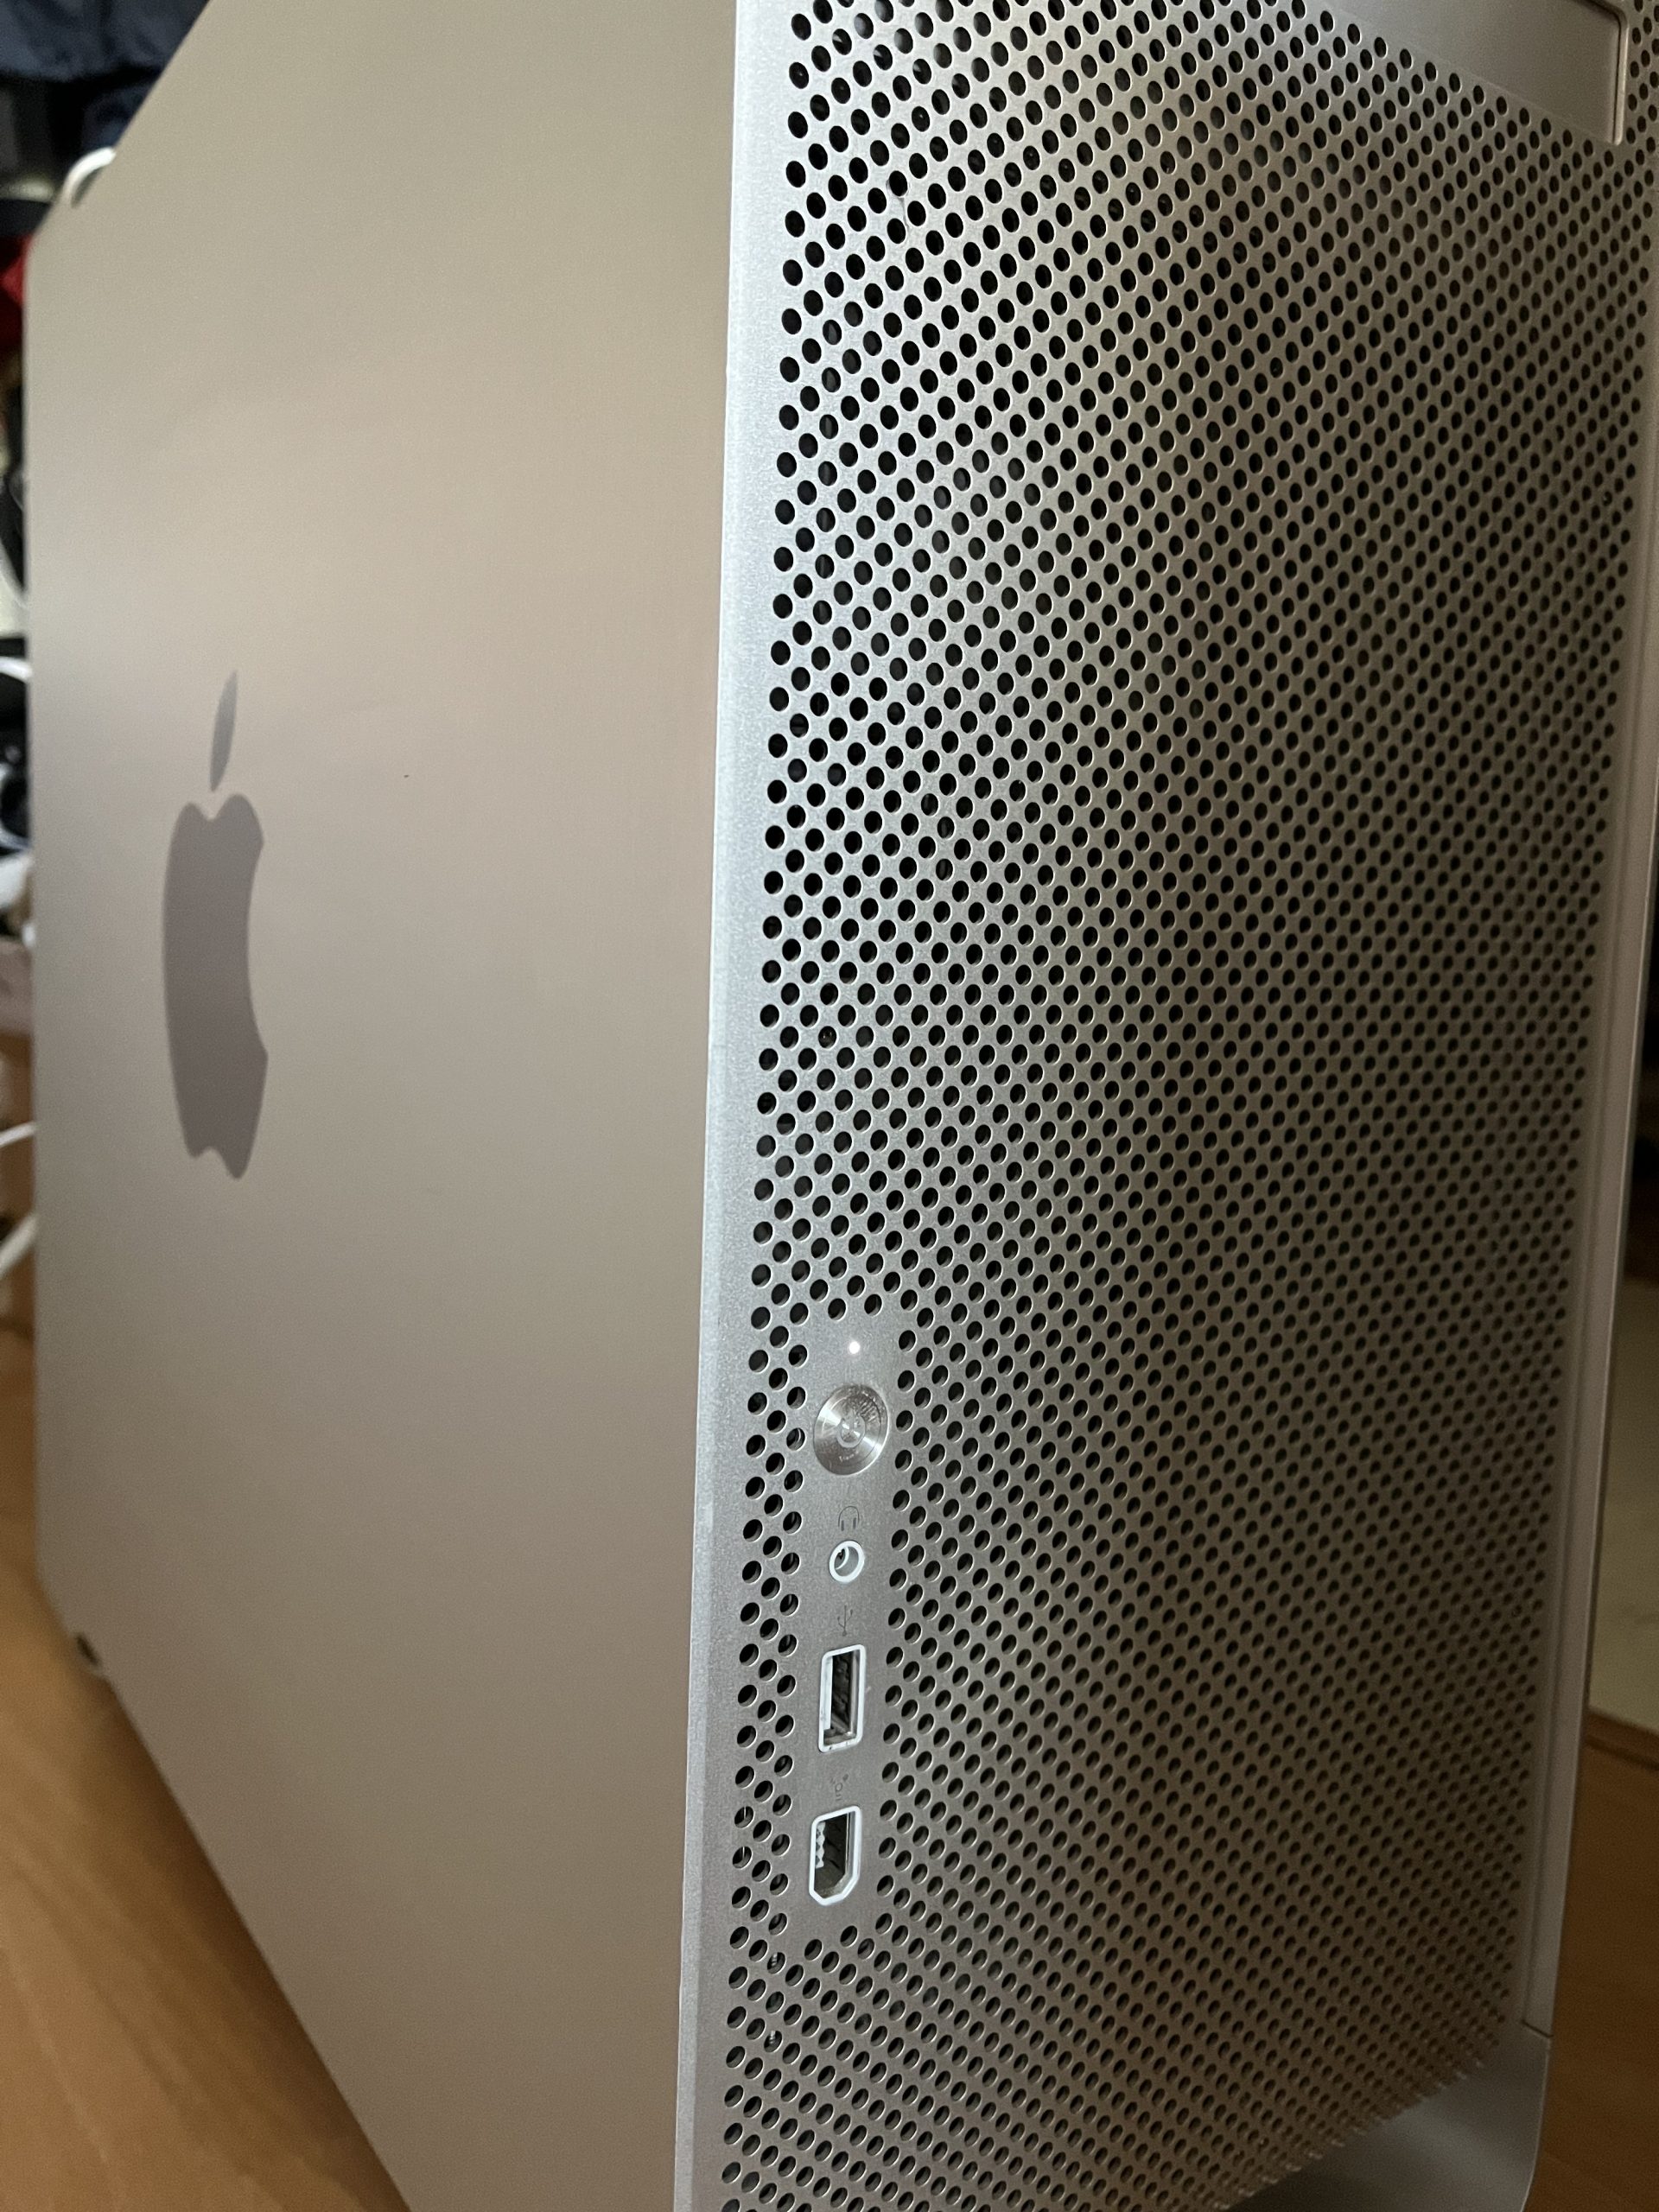 PowerMac G5 (7,2)